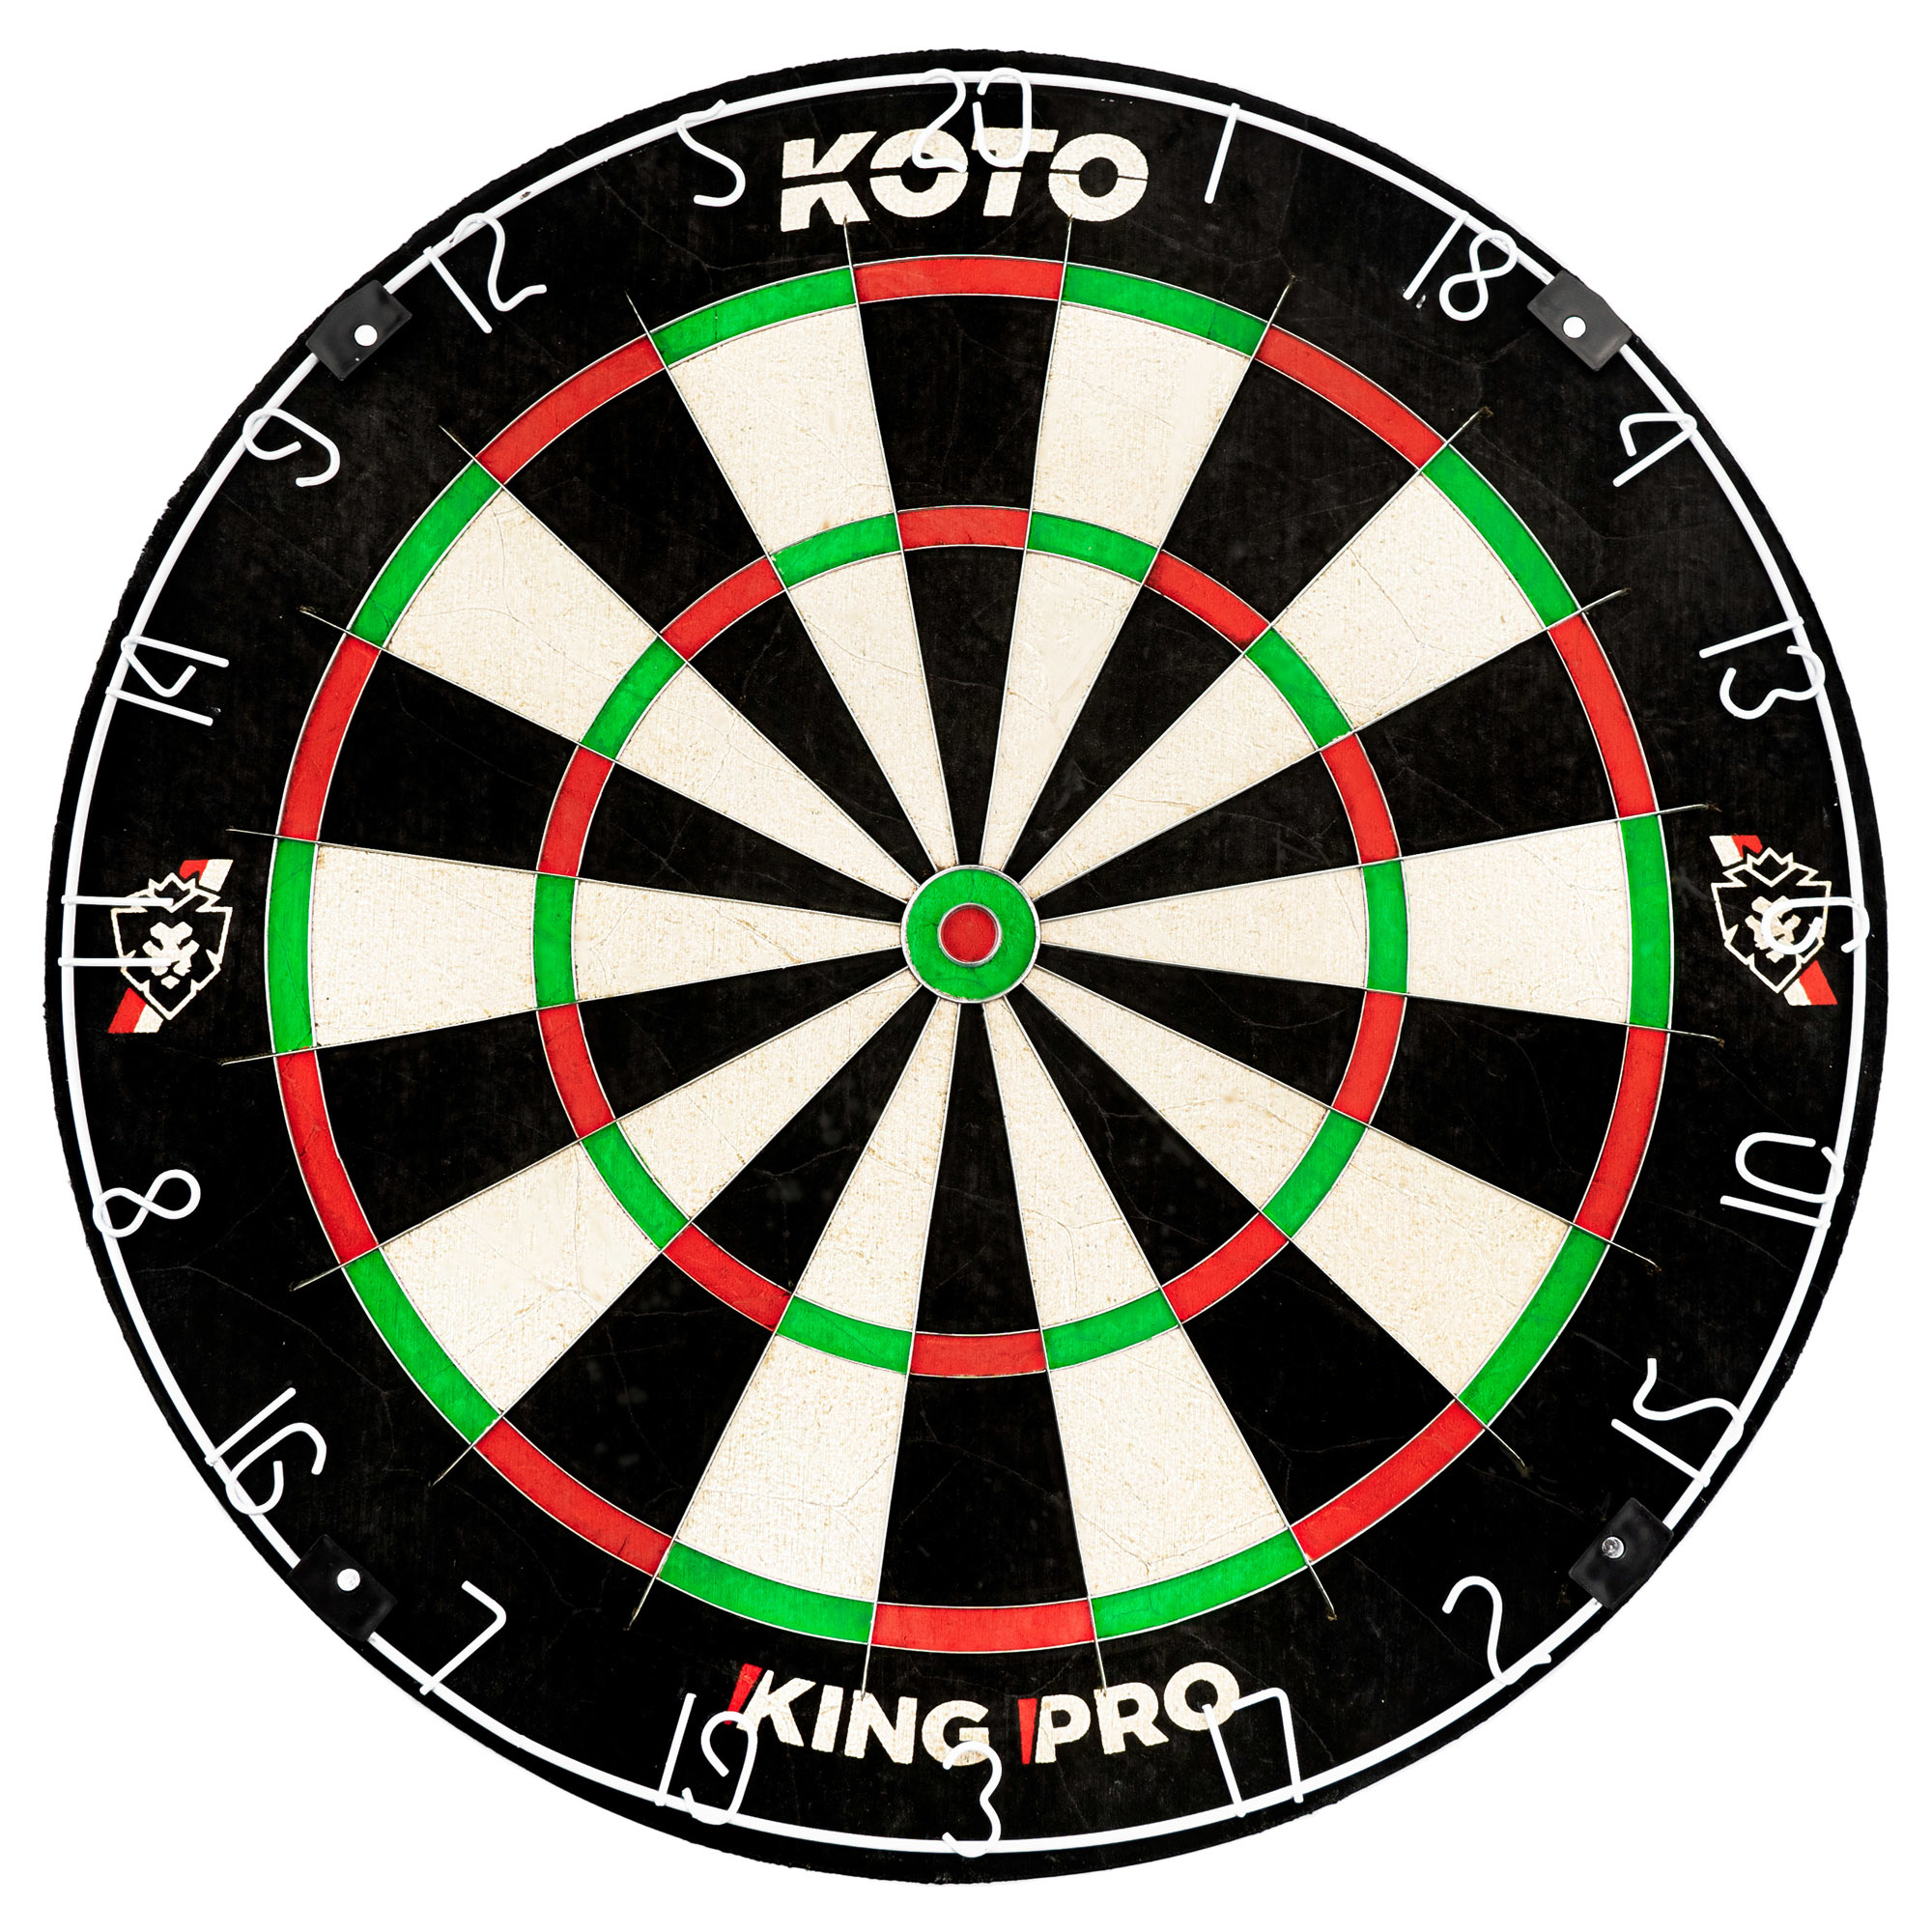 Diana KOTO King Pro Dartboard Profesional 